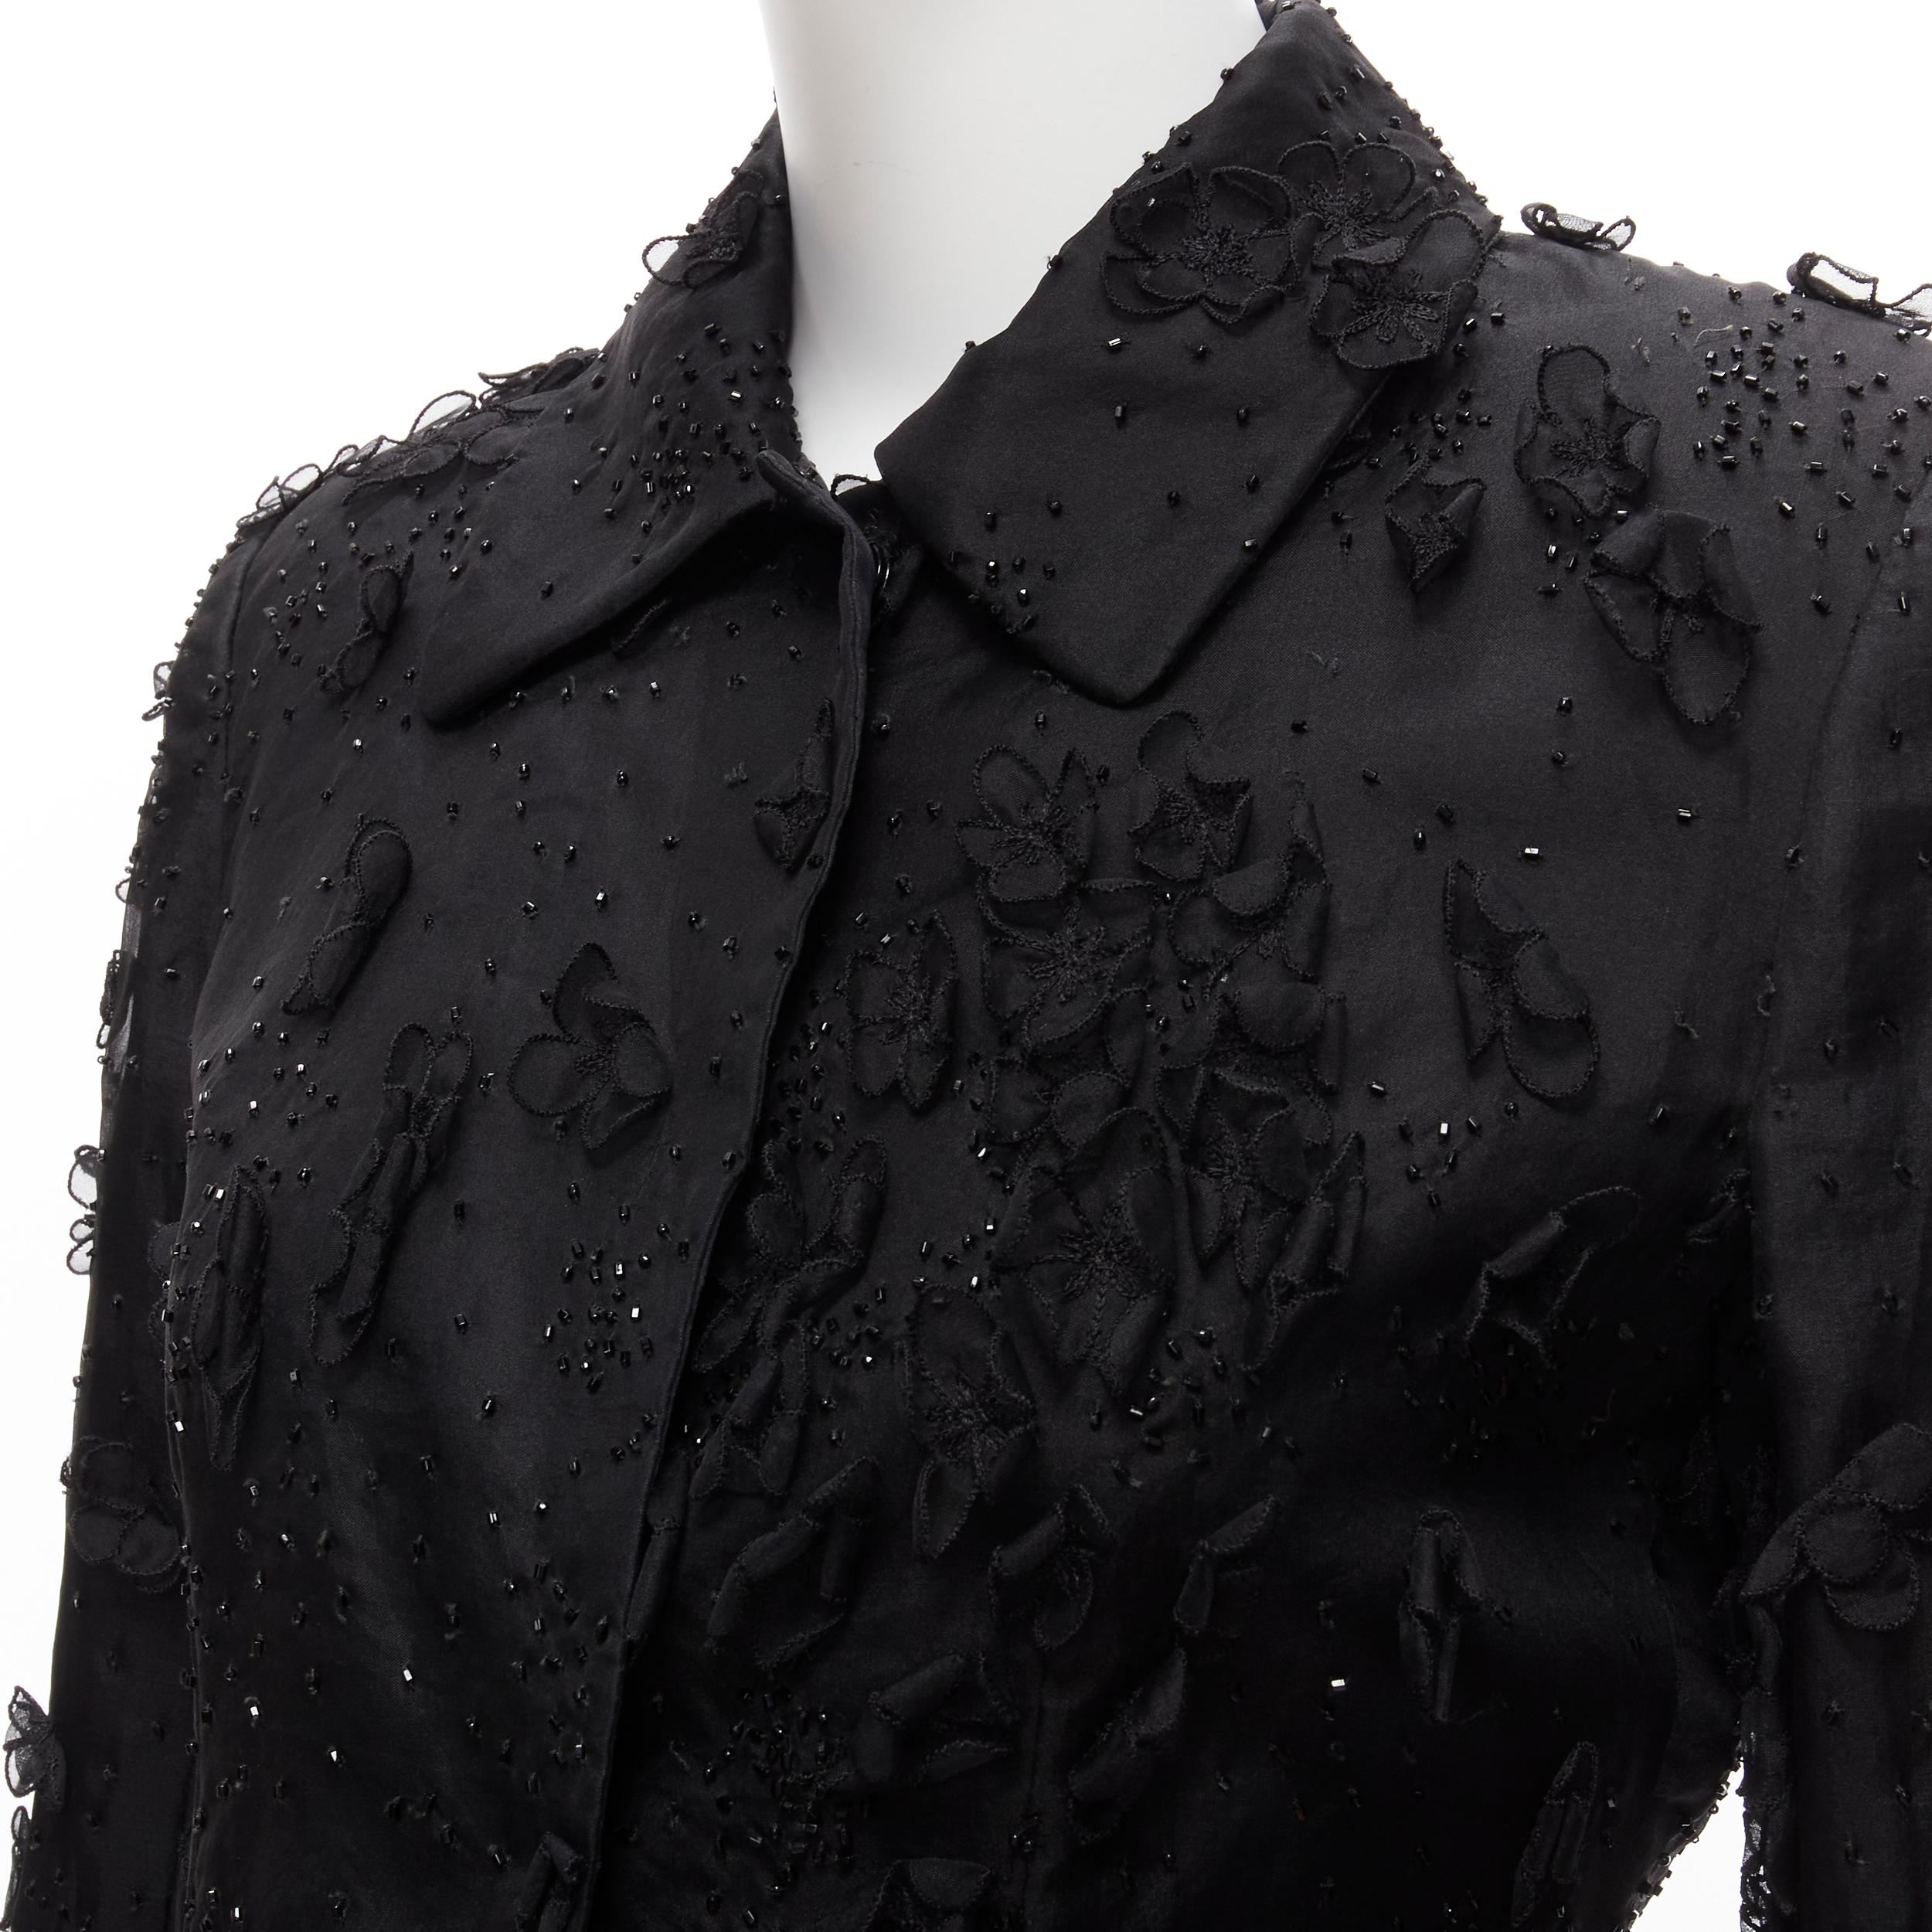 DOLCE GABBANA black silk flower petals bead embellished blazer jacket S
Reference: TGAS/D00362
Brand: Dolce Gabbana
Designer: Domenico Dolce and Stefano Gabbana
Material: Silk
Color: Black
Pattern: Solid
Closure: Snap Buttons
Lining: Black